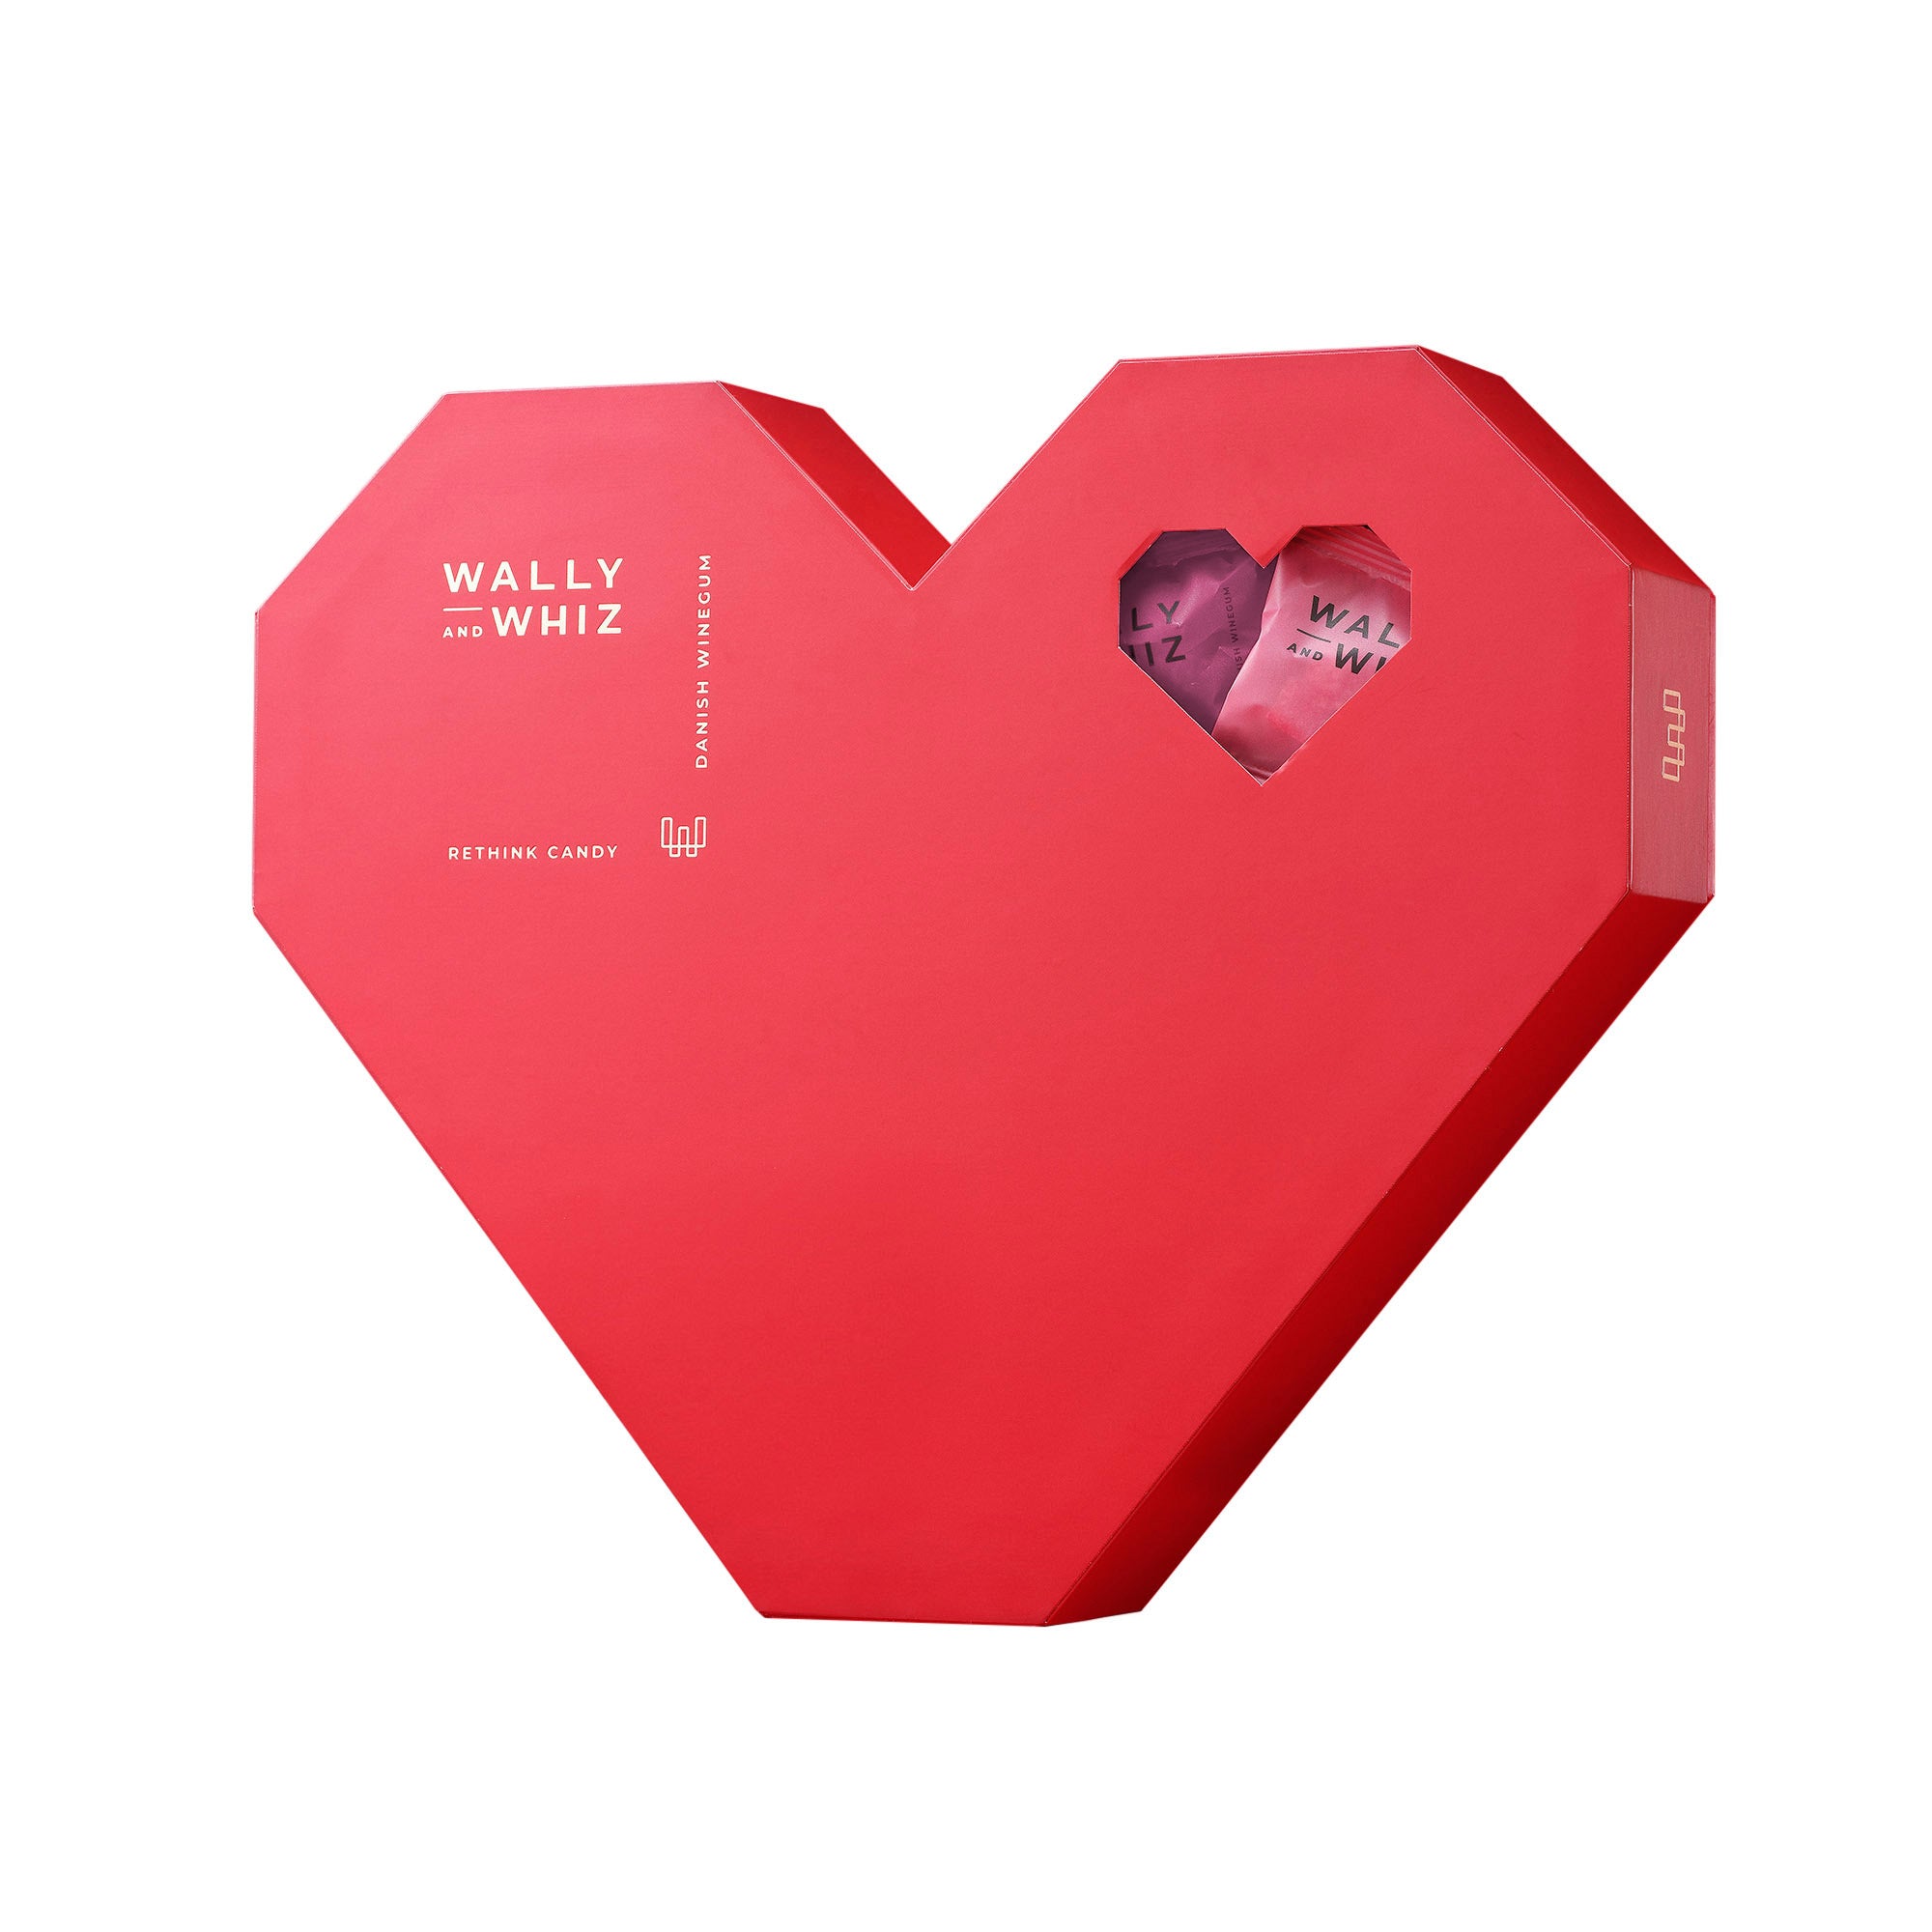 Heart box, 605g